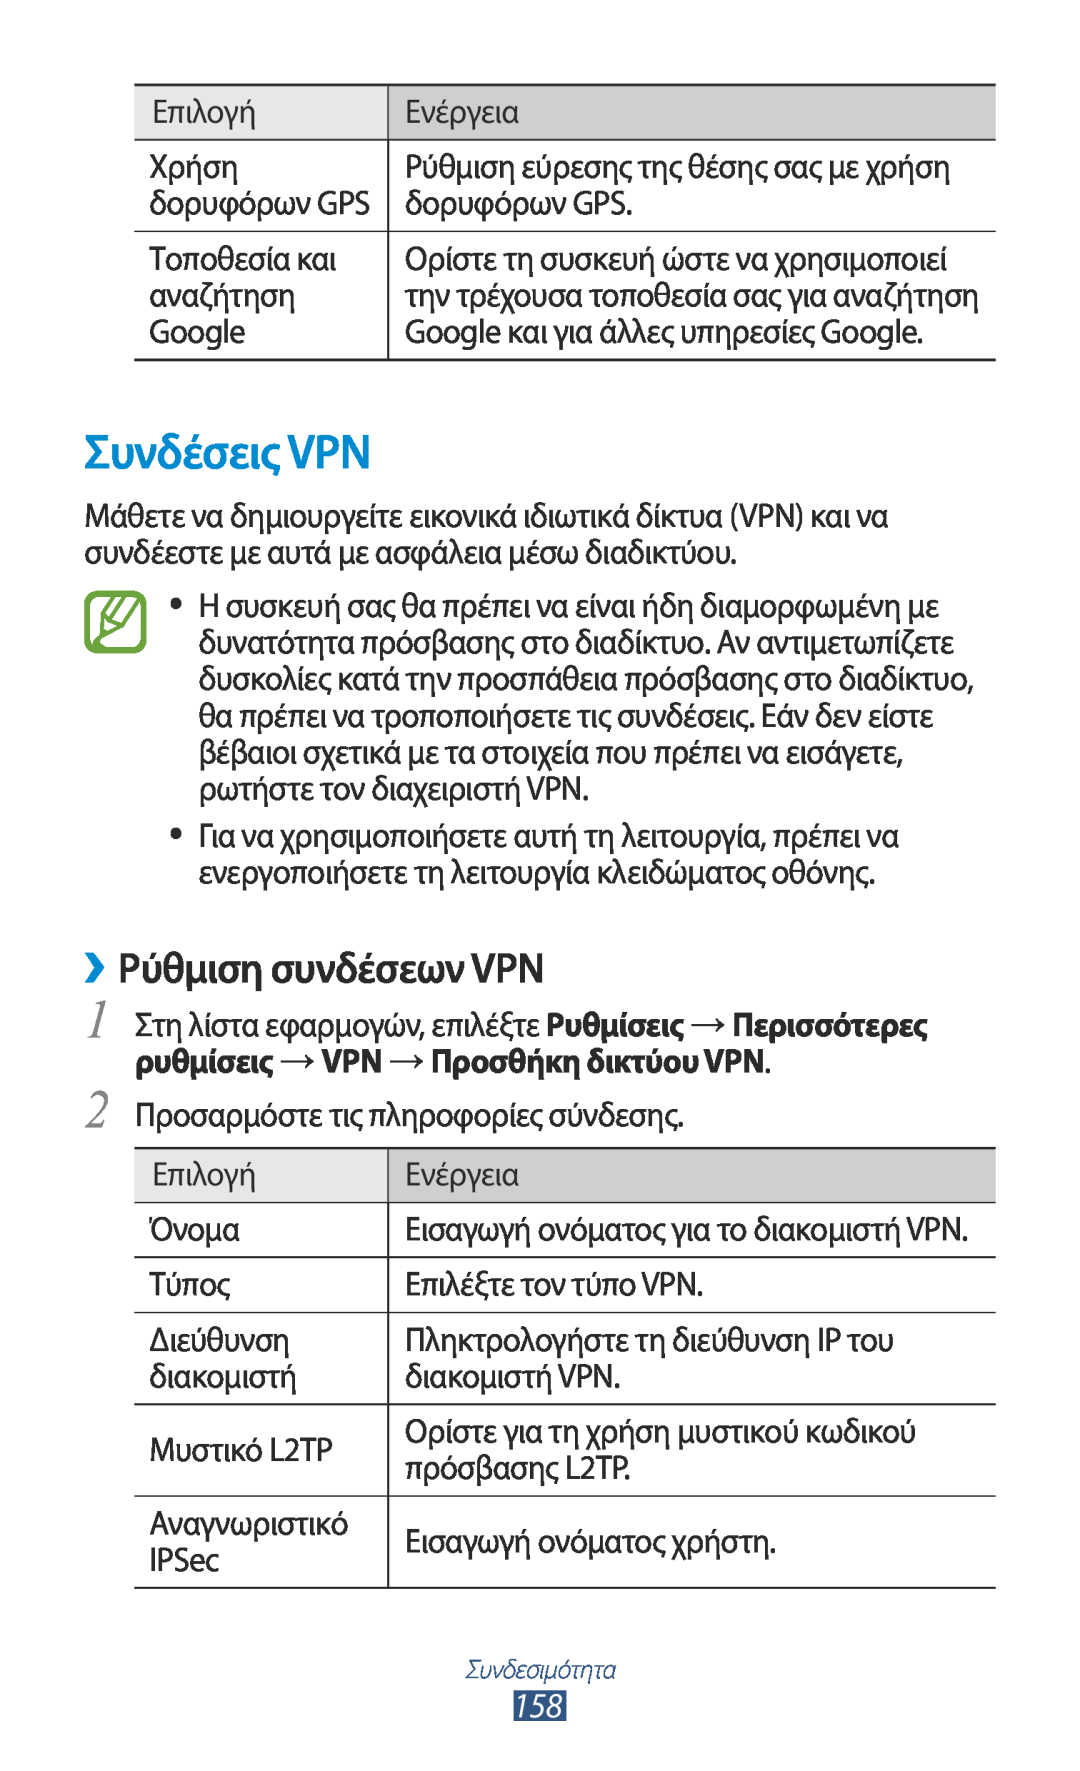 Samsung GT-N7000ZBEEUR, GT-N7000ZBAEUR manual Συνδέσεις VPN, ››Ρύθμιση συνδέσεων VPN, ρυθμίσεις →VPN →Προσθήκη δικτύου VPN 